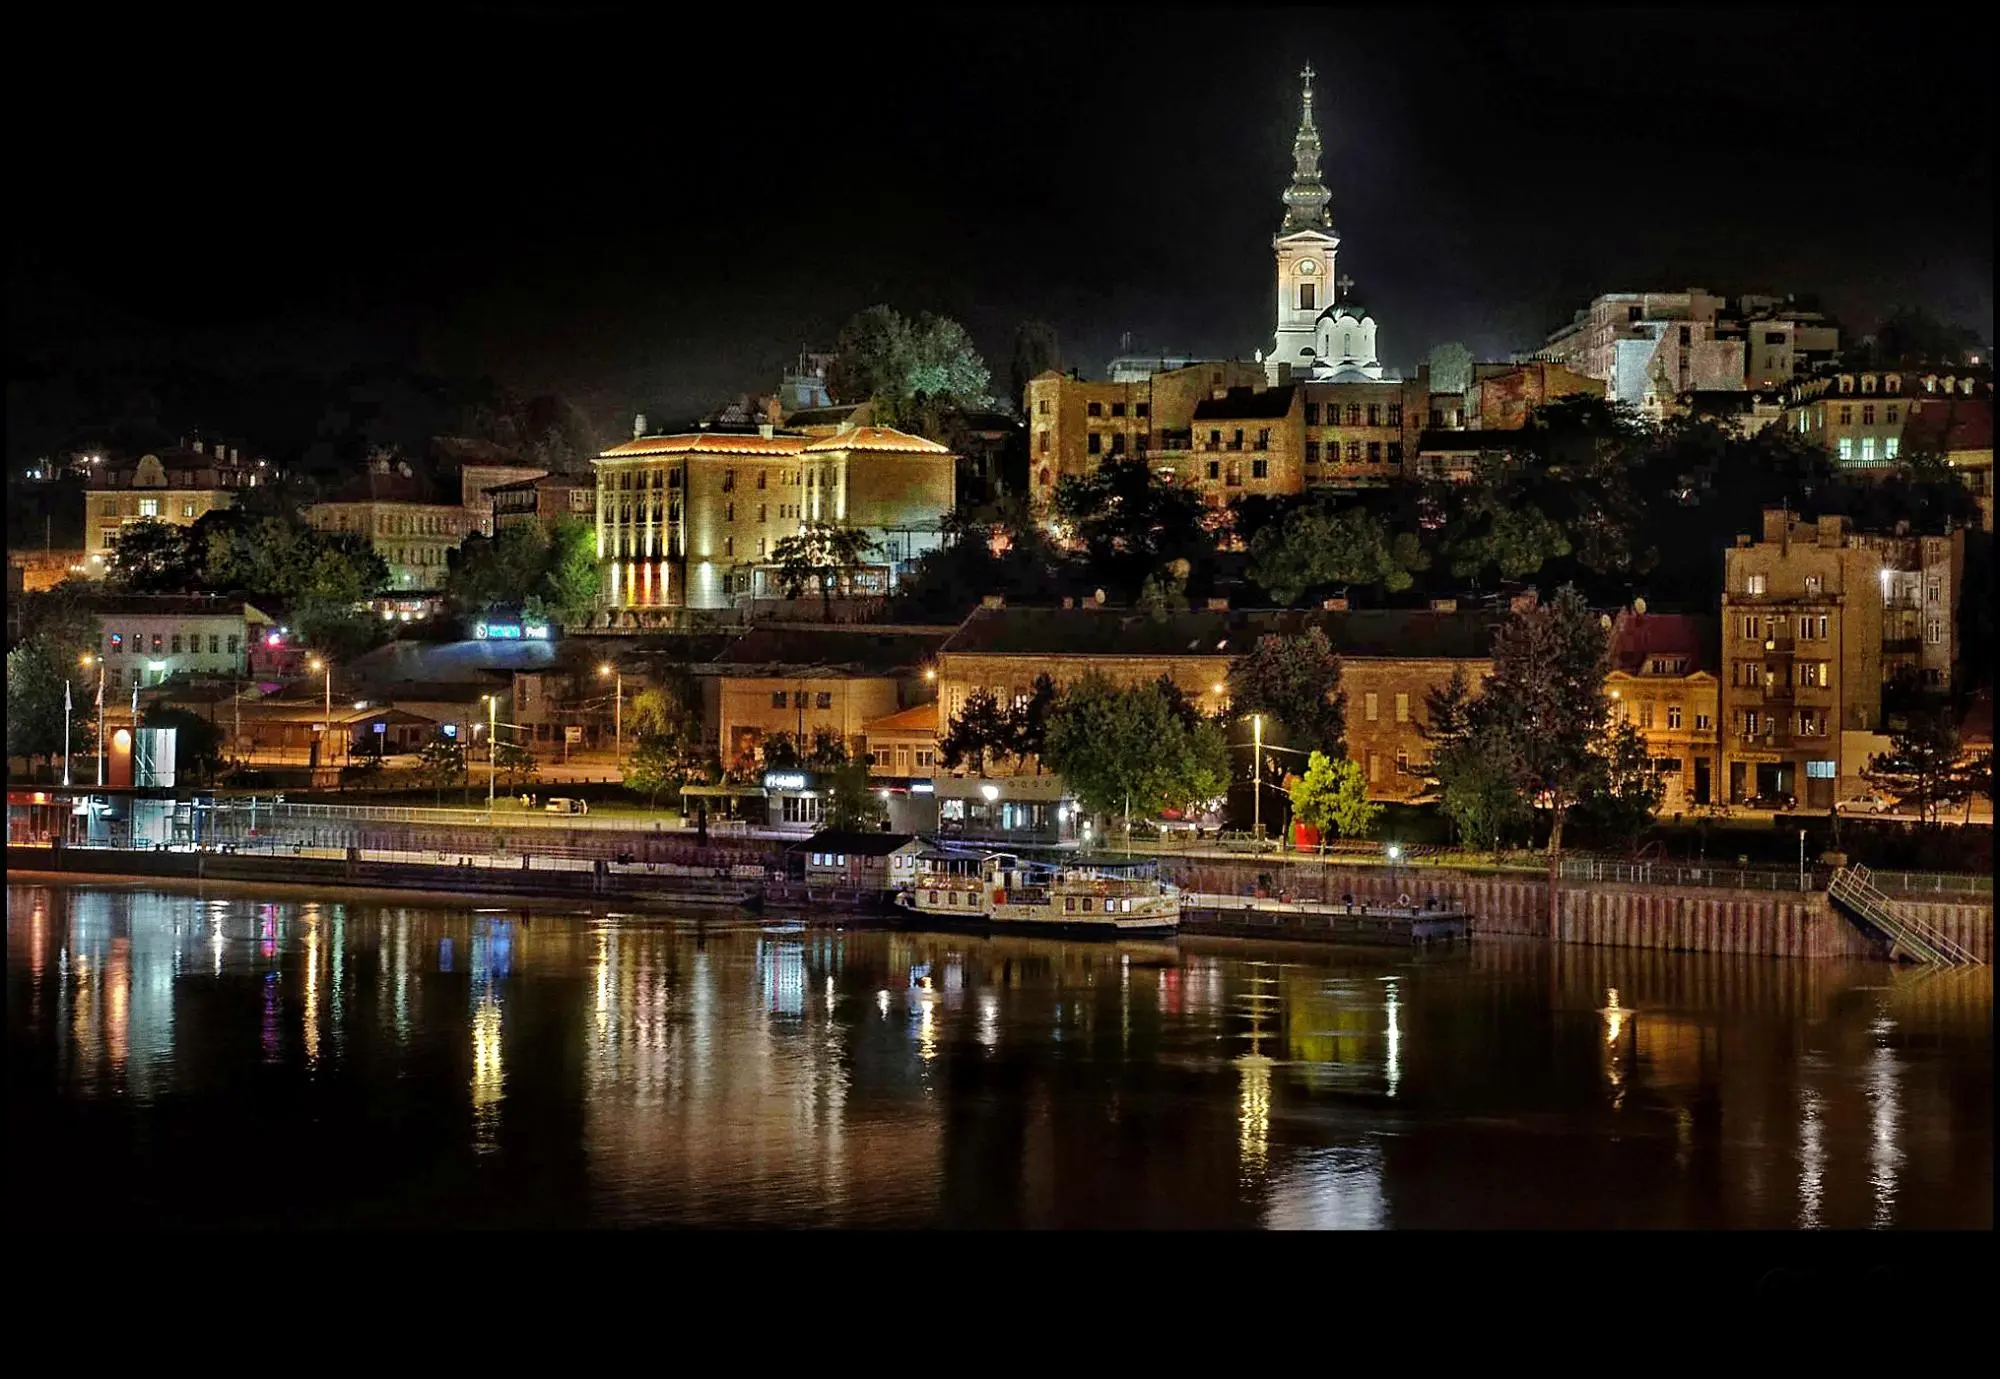 Belgrade, Serbia at night - Creative Commons Attribution-Share Alike 3.0 Unported - https://commons.wikimedia.org/wiki/File:Belgrade_at_night.webp